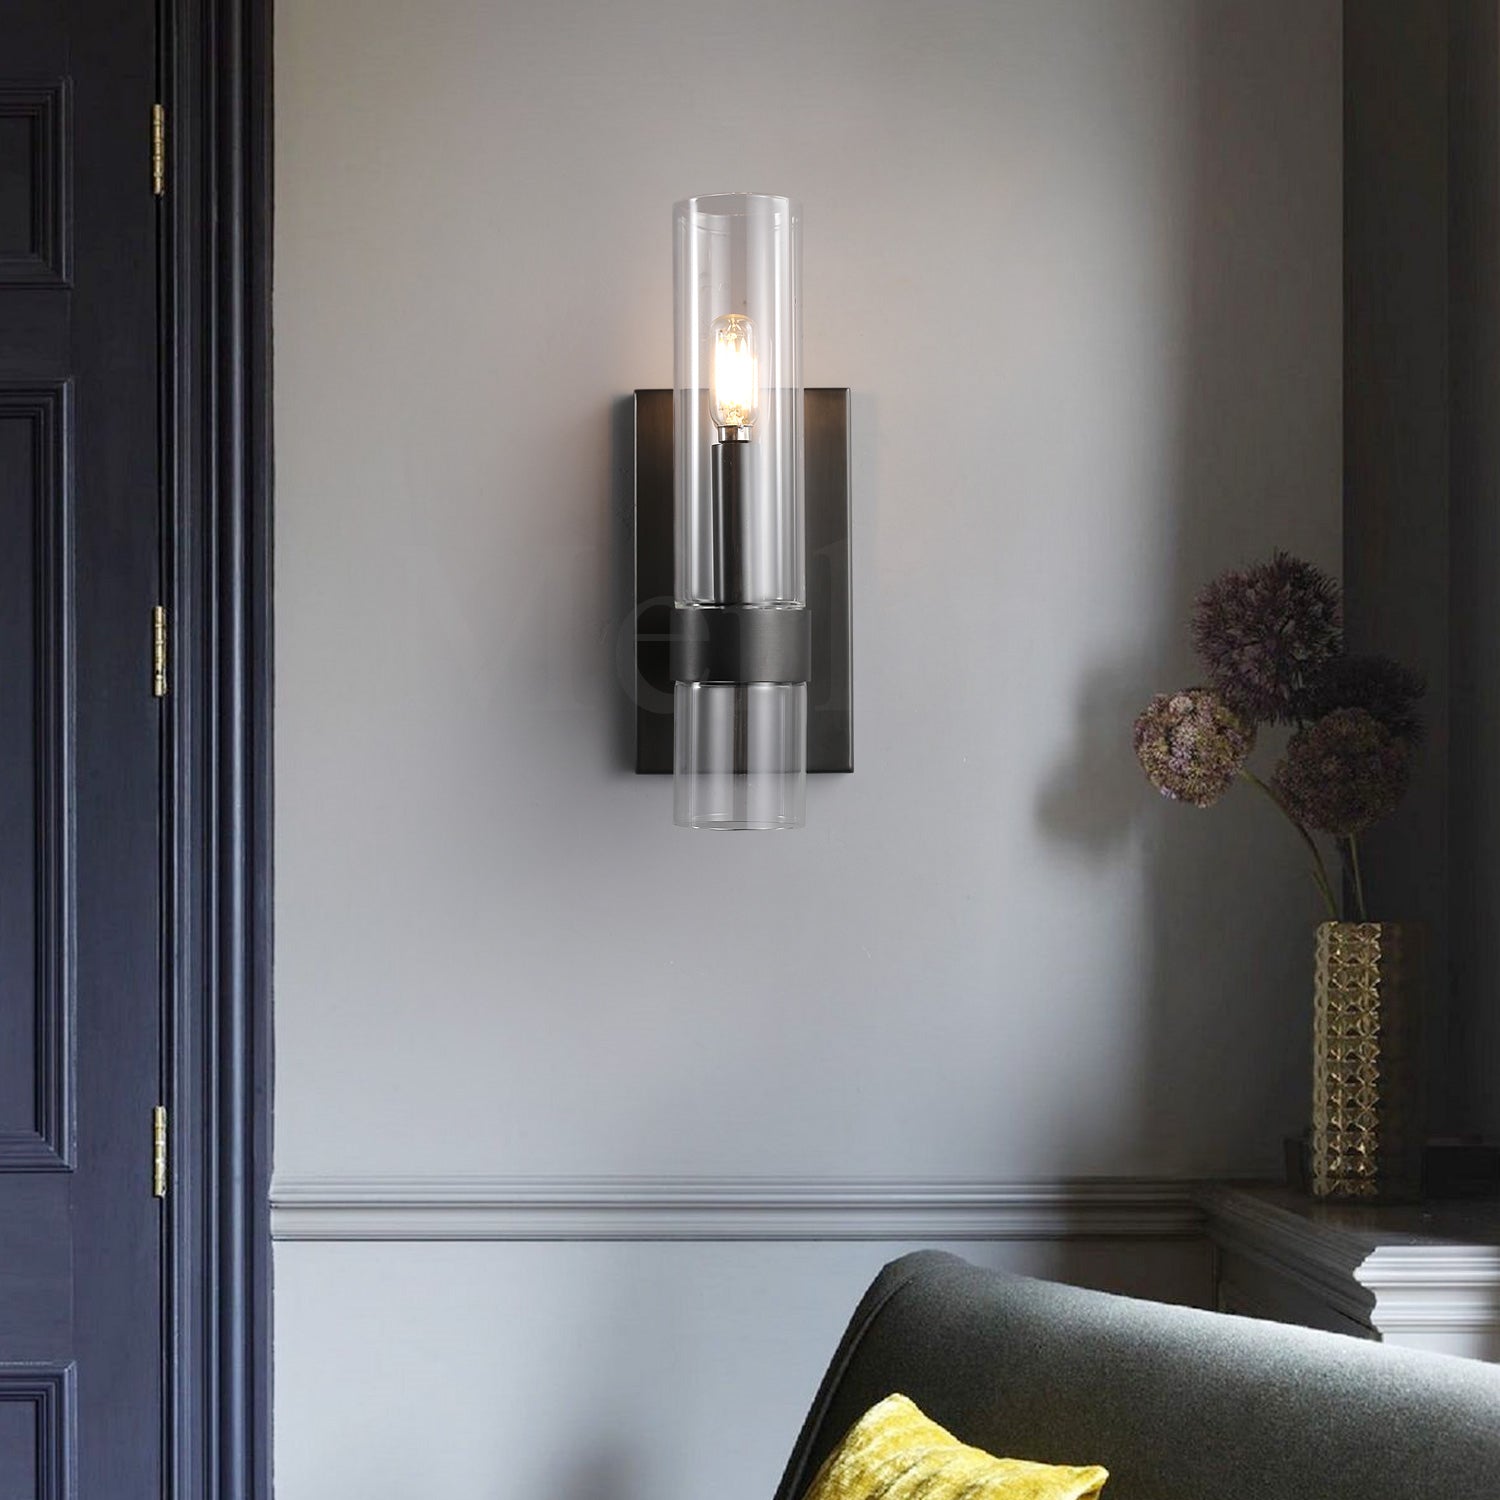 Nova Series Luxury Glass Round Chandelier, Modern Lamp Fixtures